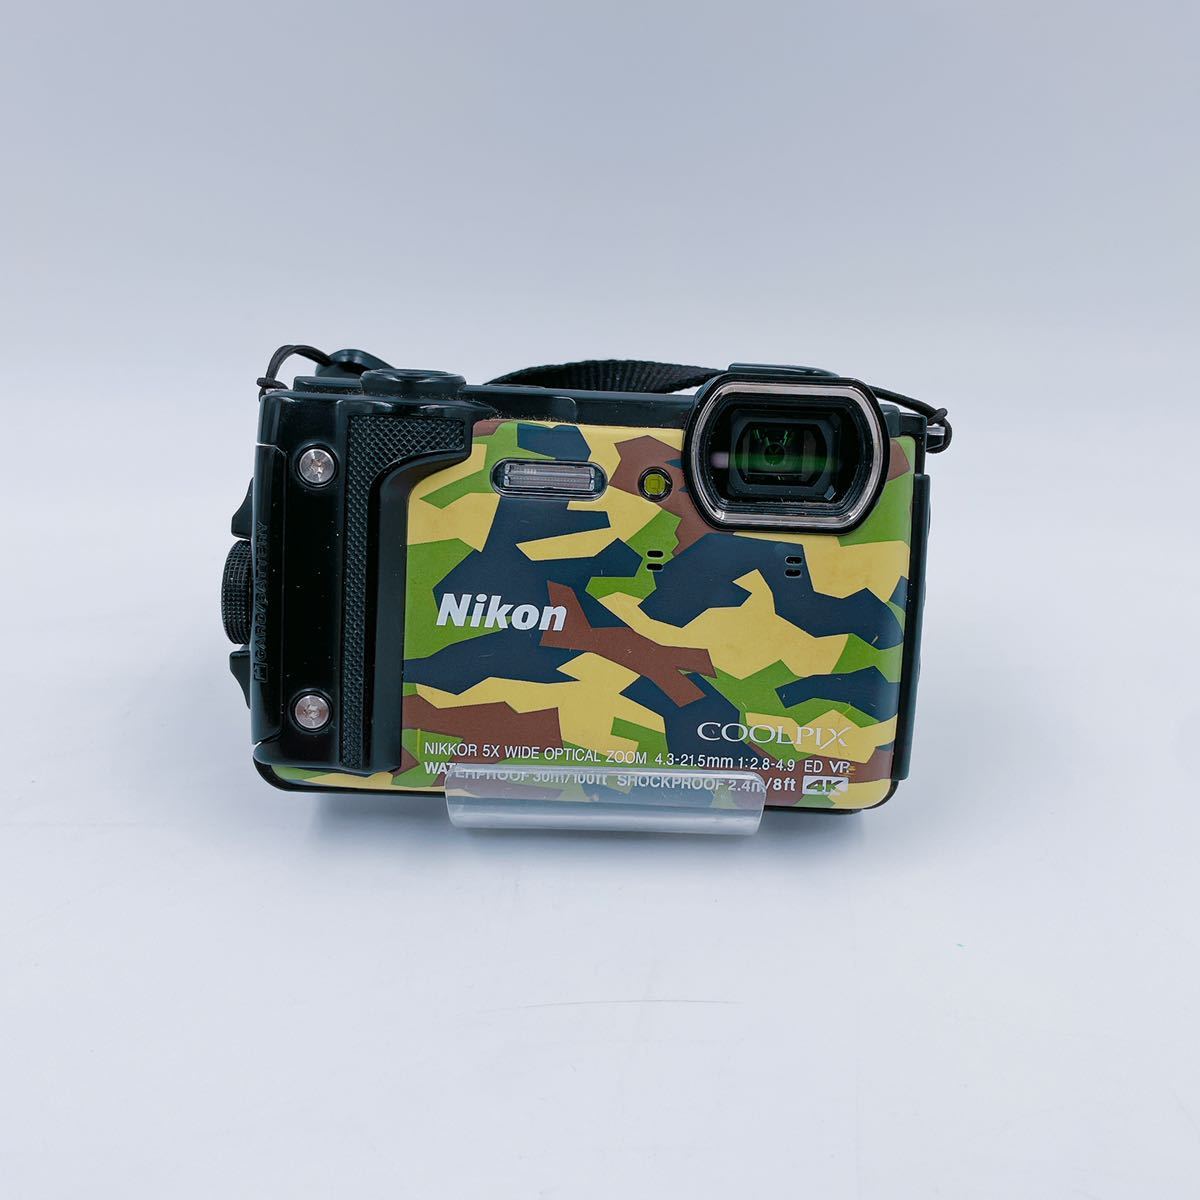 2Ｅ020 Nikon ニコン COOLPIX クールピクス W300 4.3-21.5mm 1:2.8-4.9 _画像2